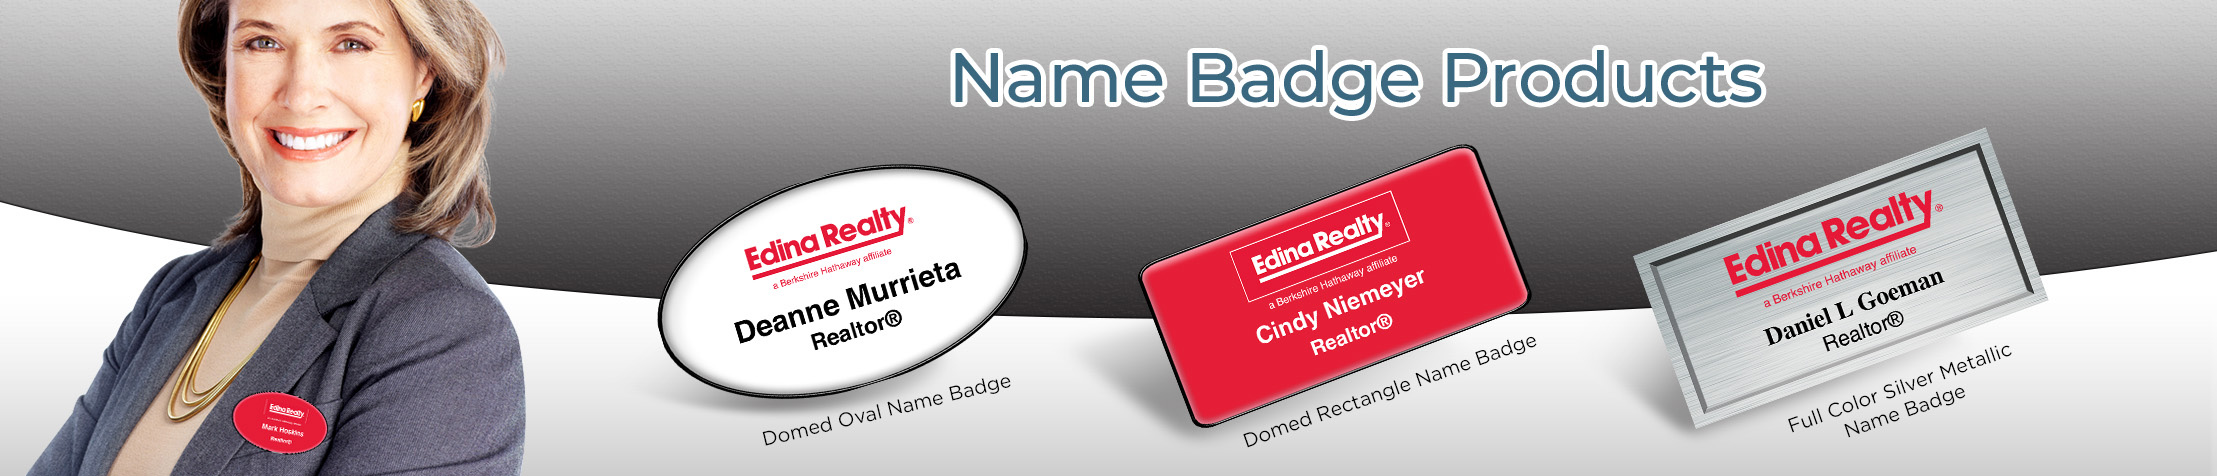 Edina Realty Real Estate Name Badge Products - Edina Realty Real Estate Name Tags for Realtors | BestPrintBuy.com